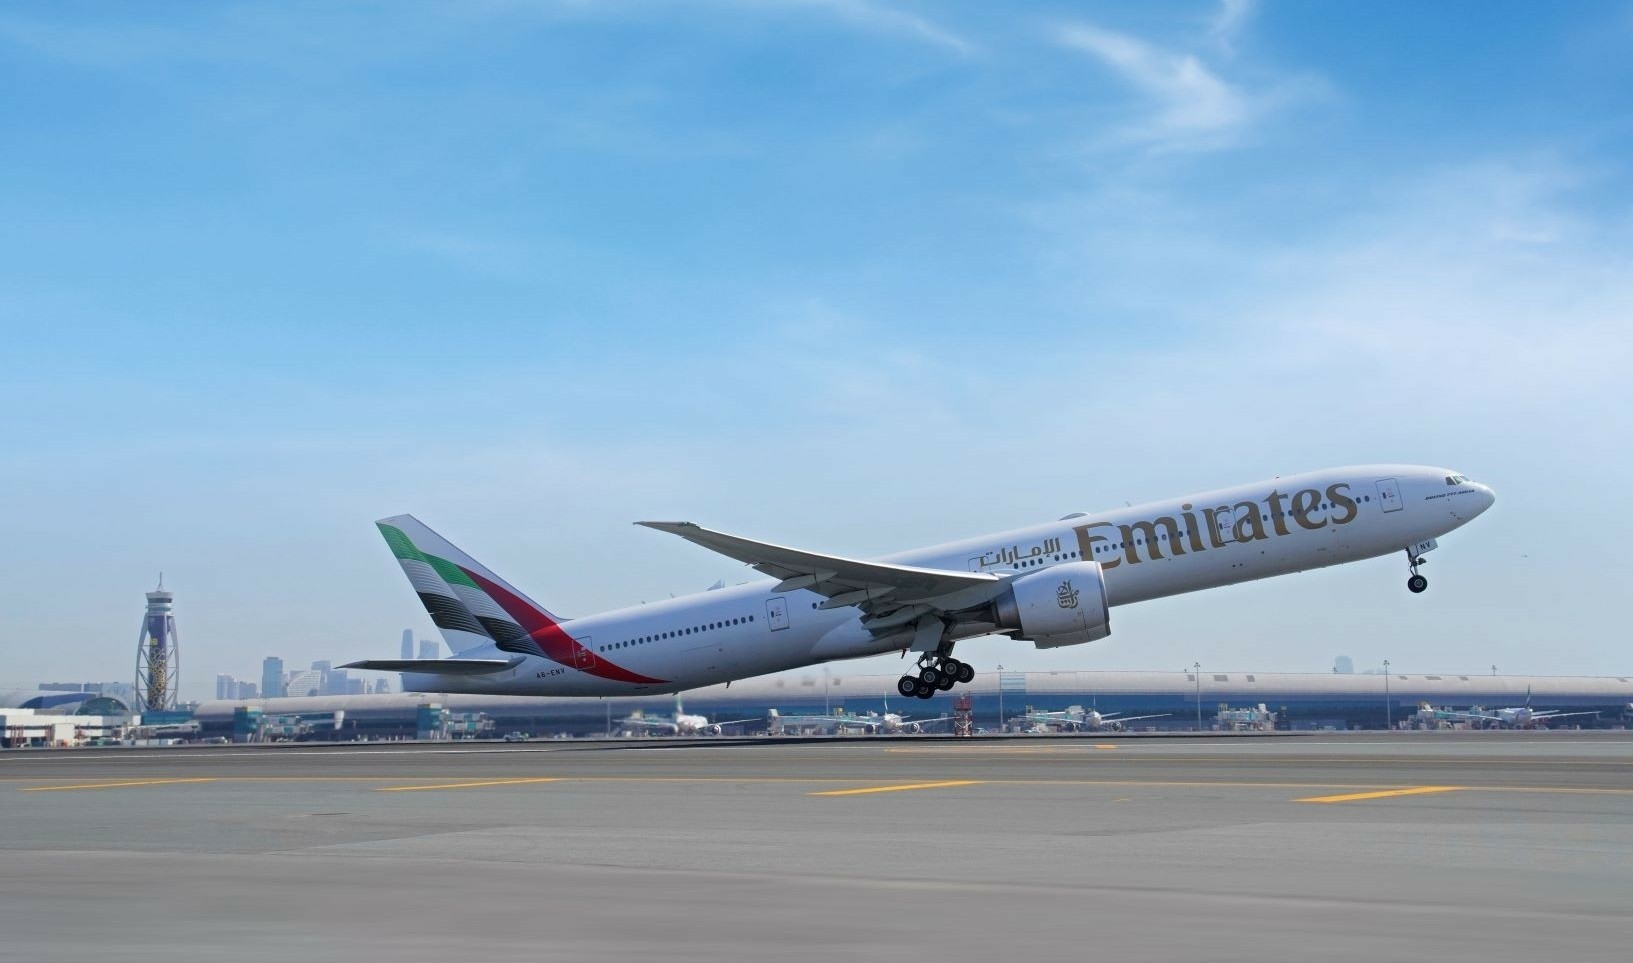 Emirates: Μεταφορά επιβατών σε περισσότερους από 800 προορισμούς μέσα από συνεργασίες με αεροπορικές εταιρείες